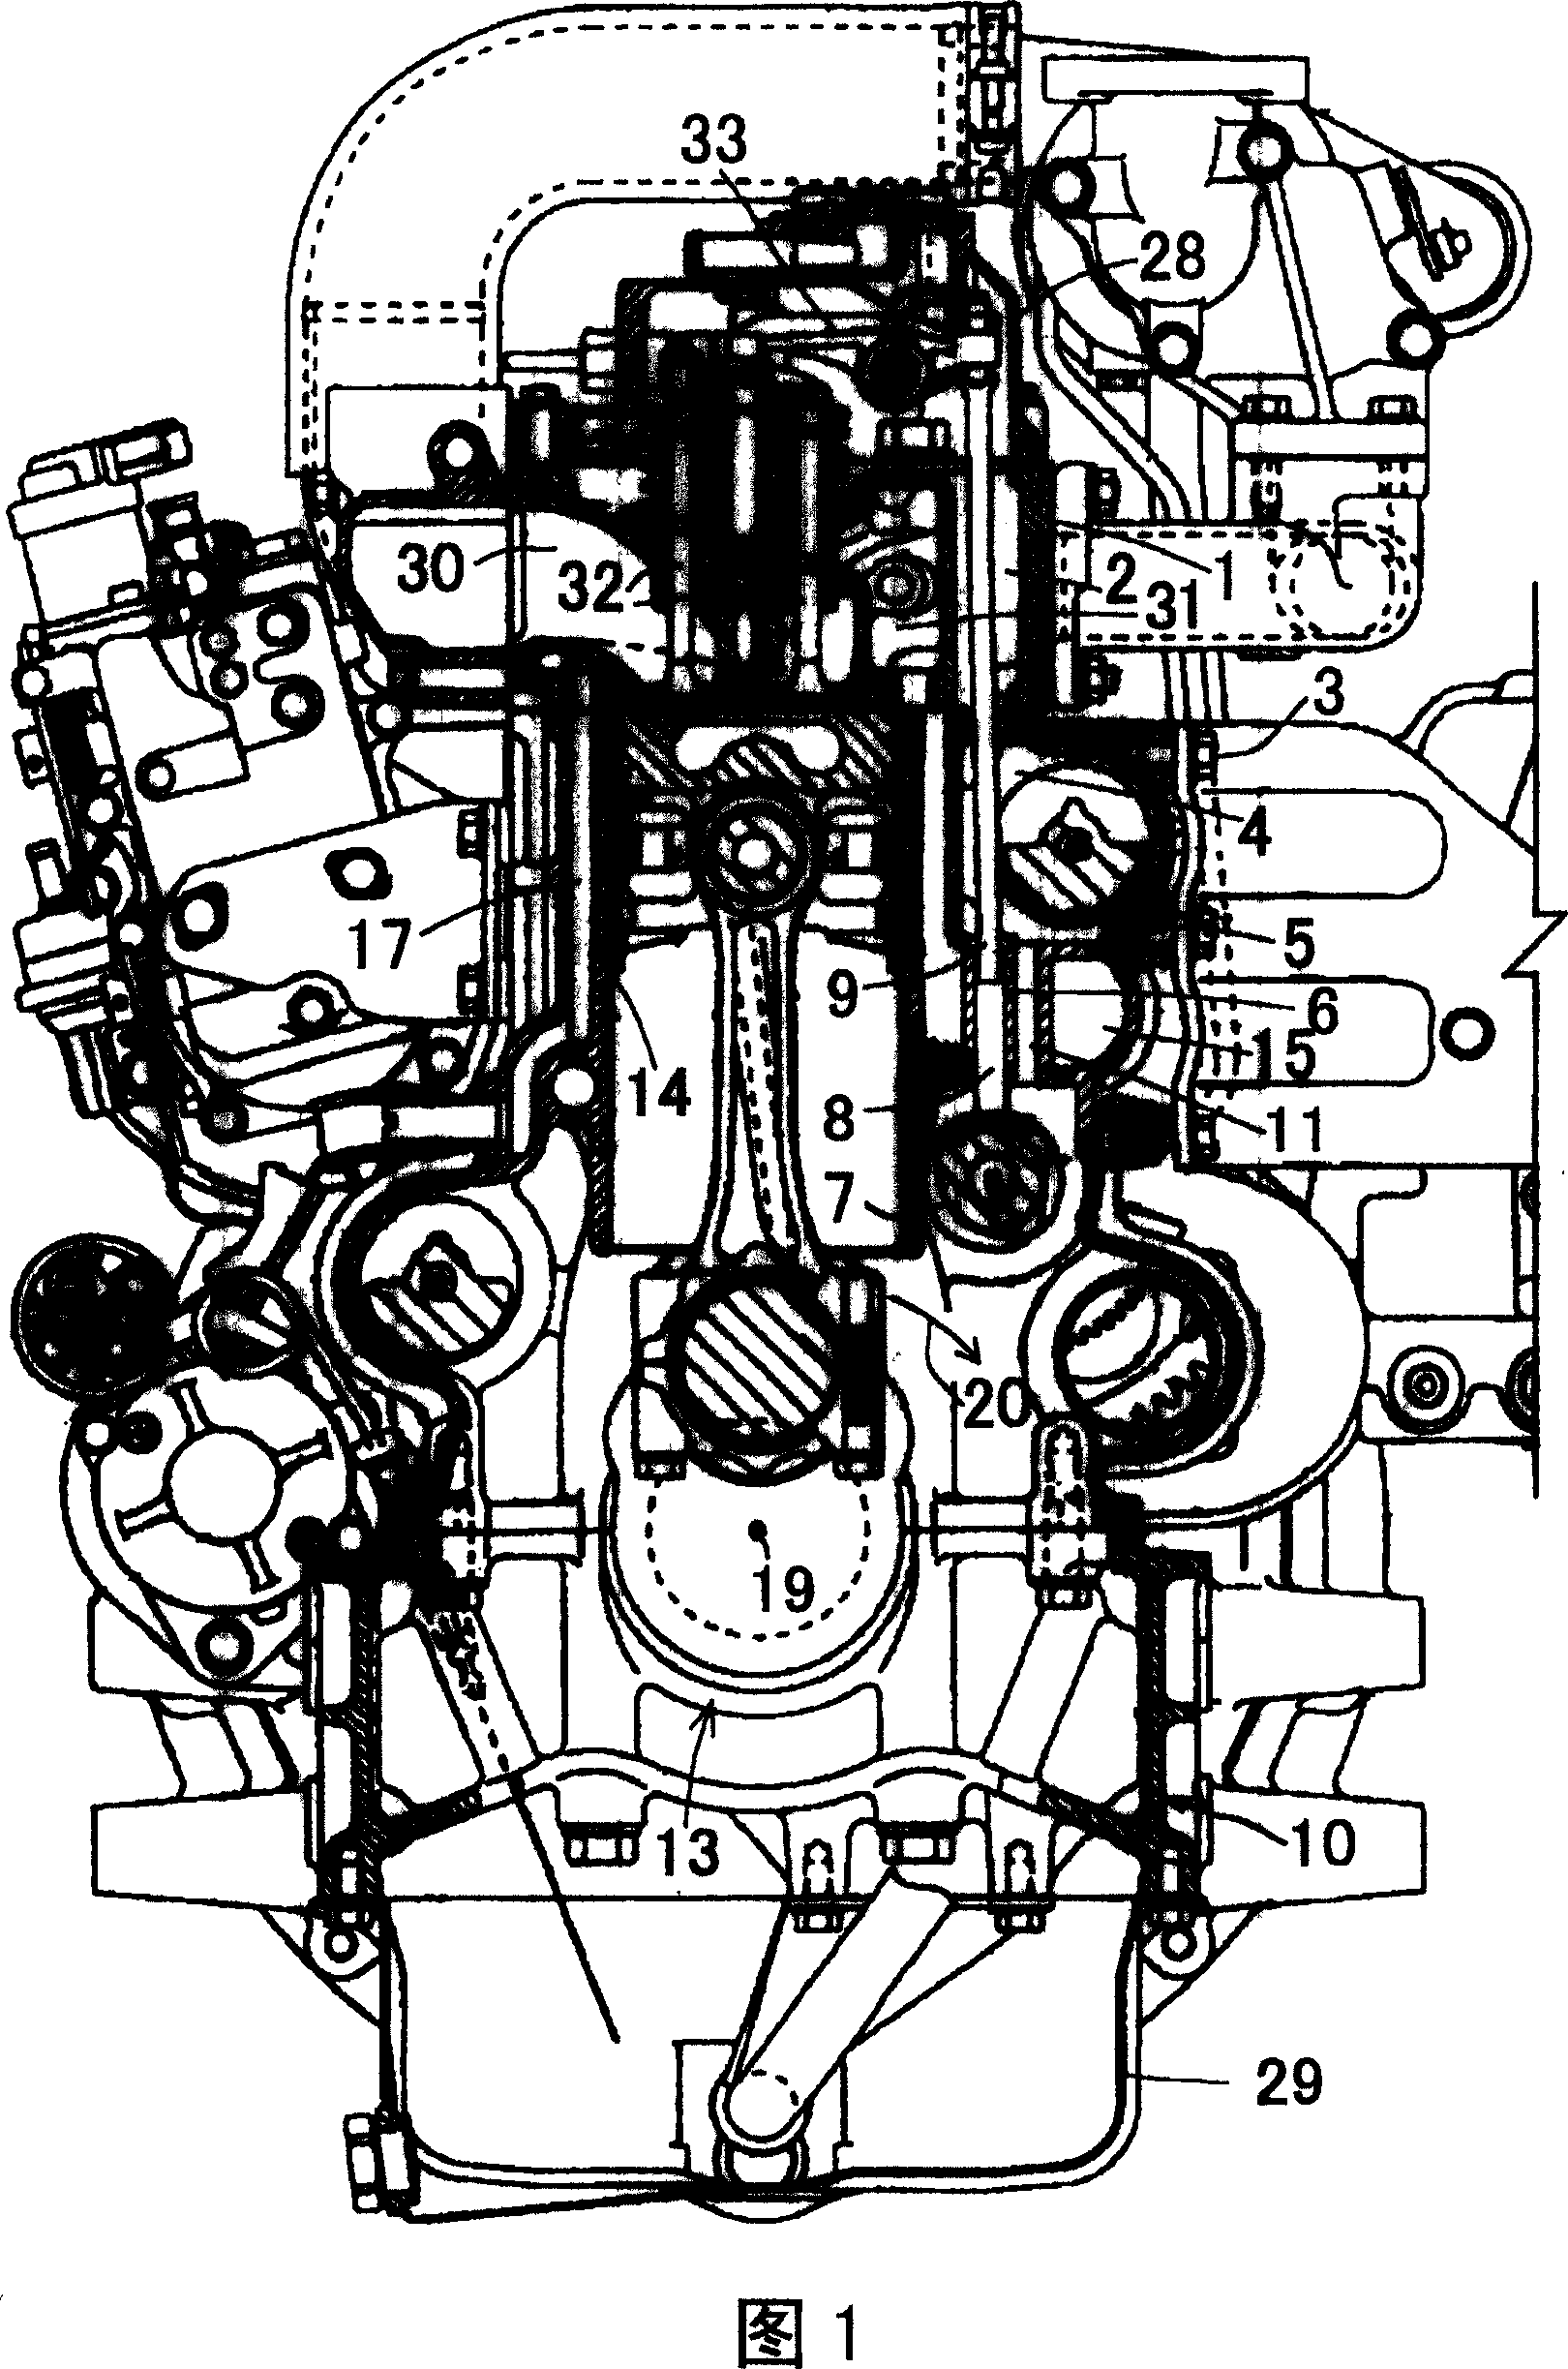 Top-mounted valve engine